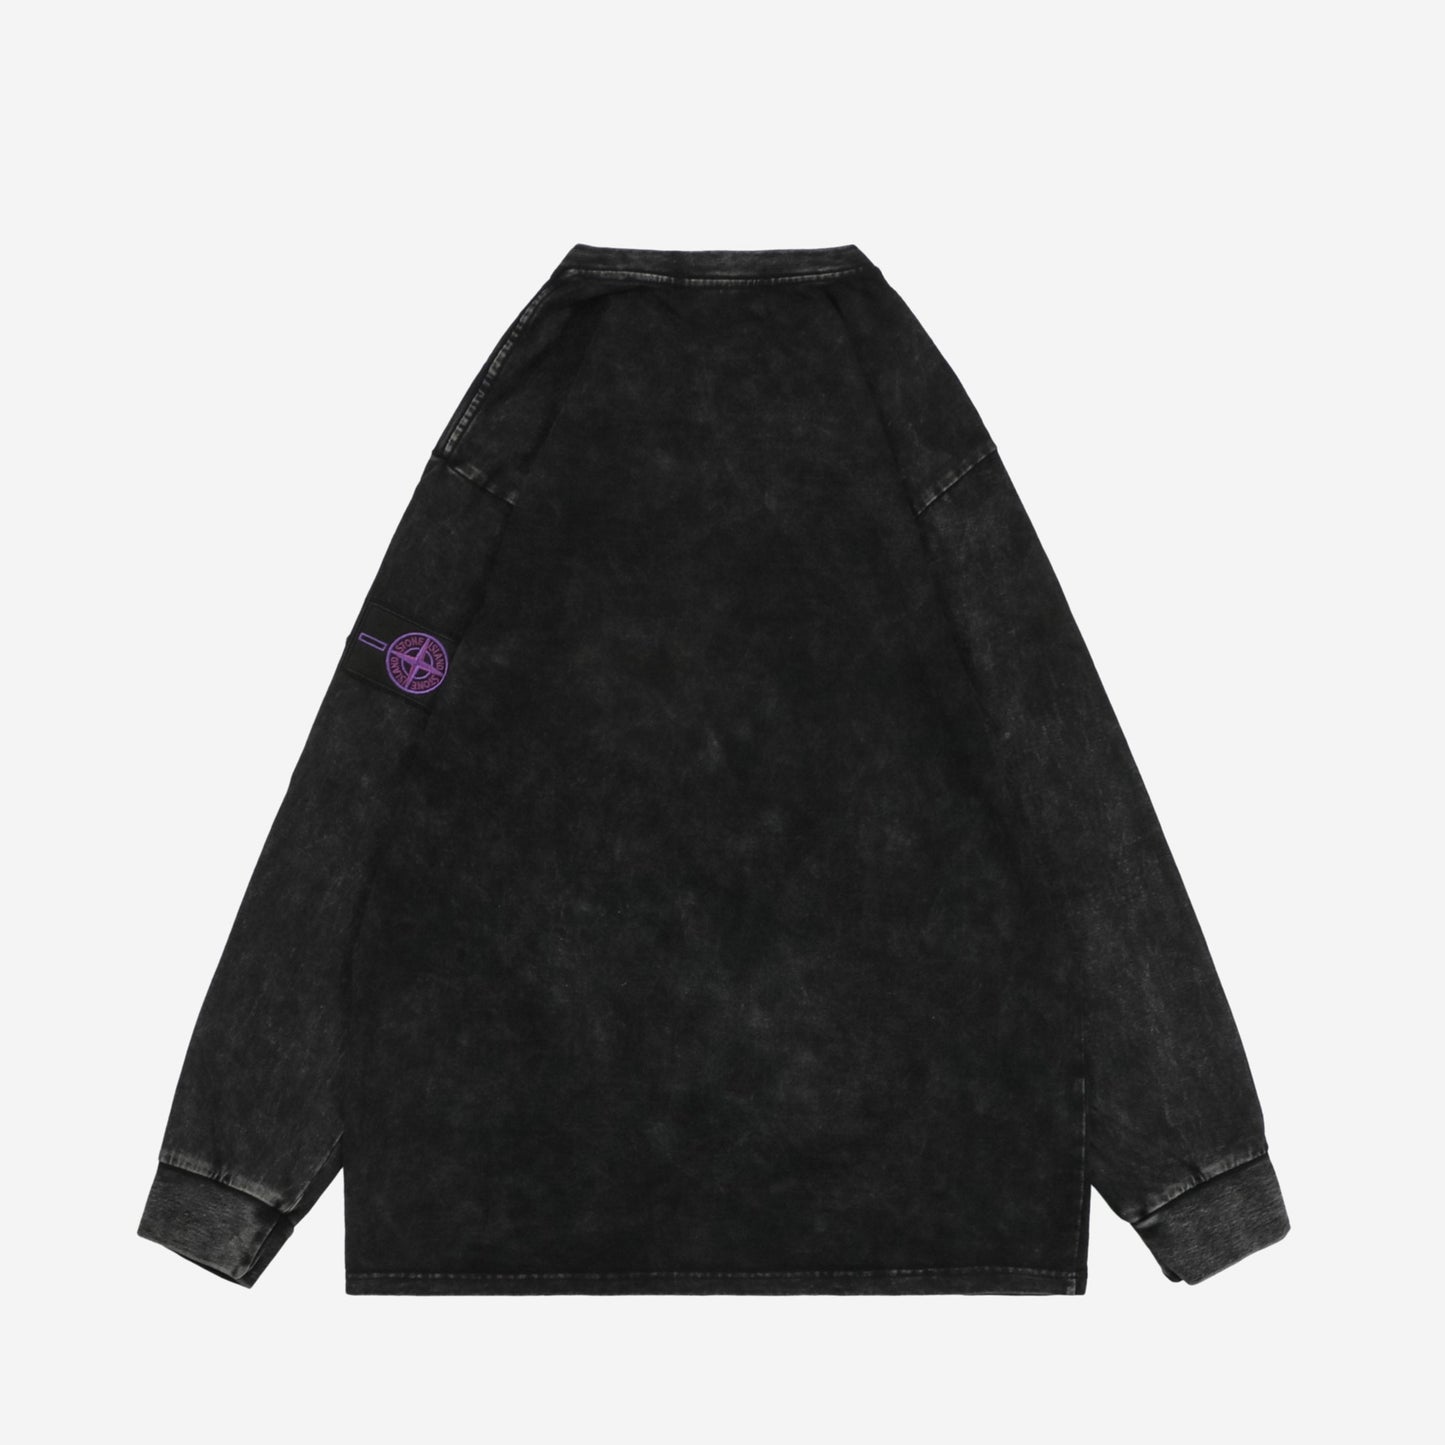 Stone Island Black Sweater (Purple Logo)